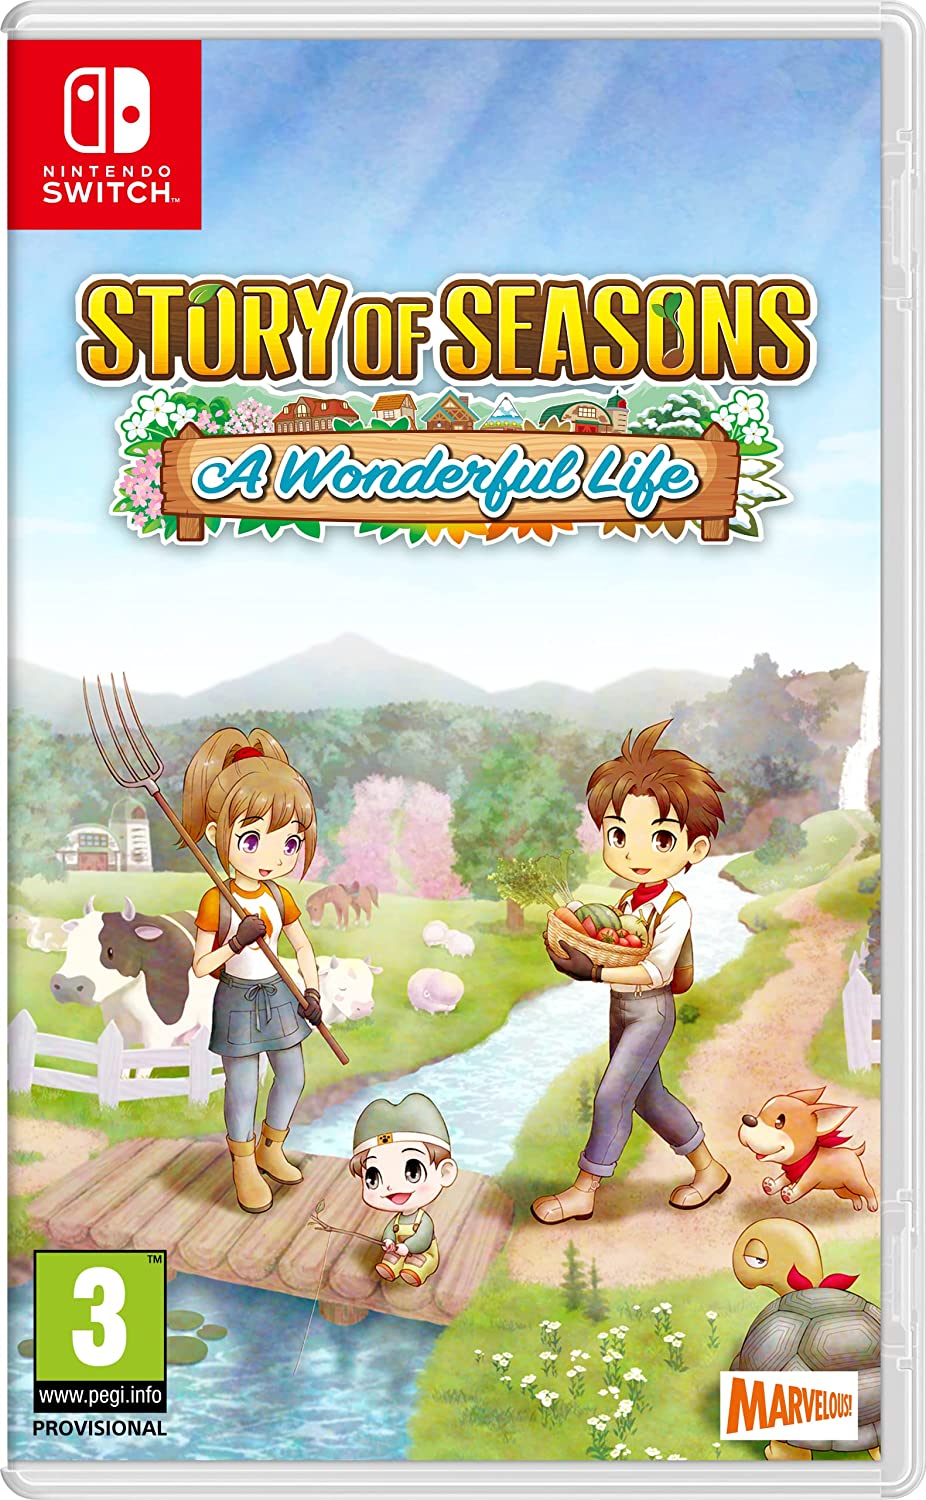 Story of A Wonderful Life | Harvest Moon Wiki | Fandom